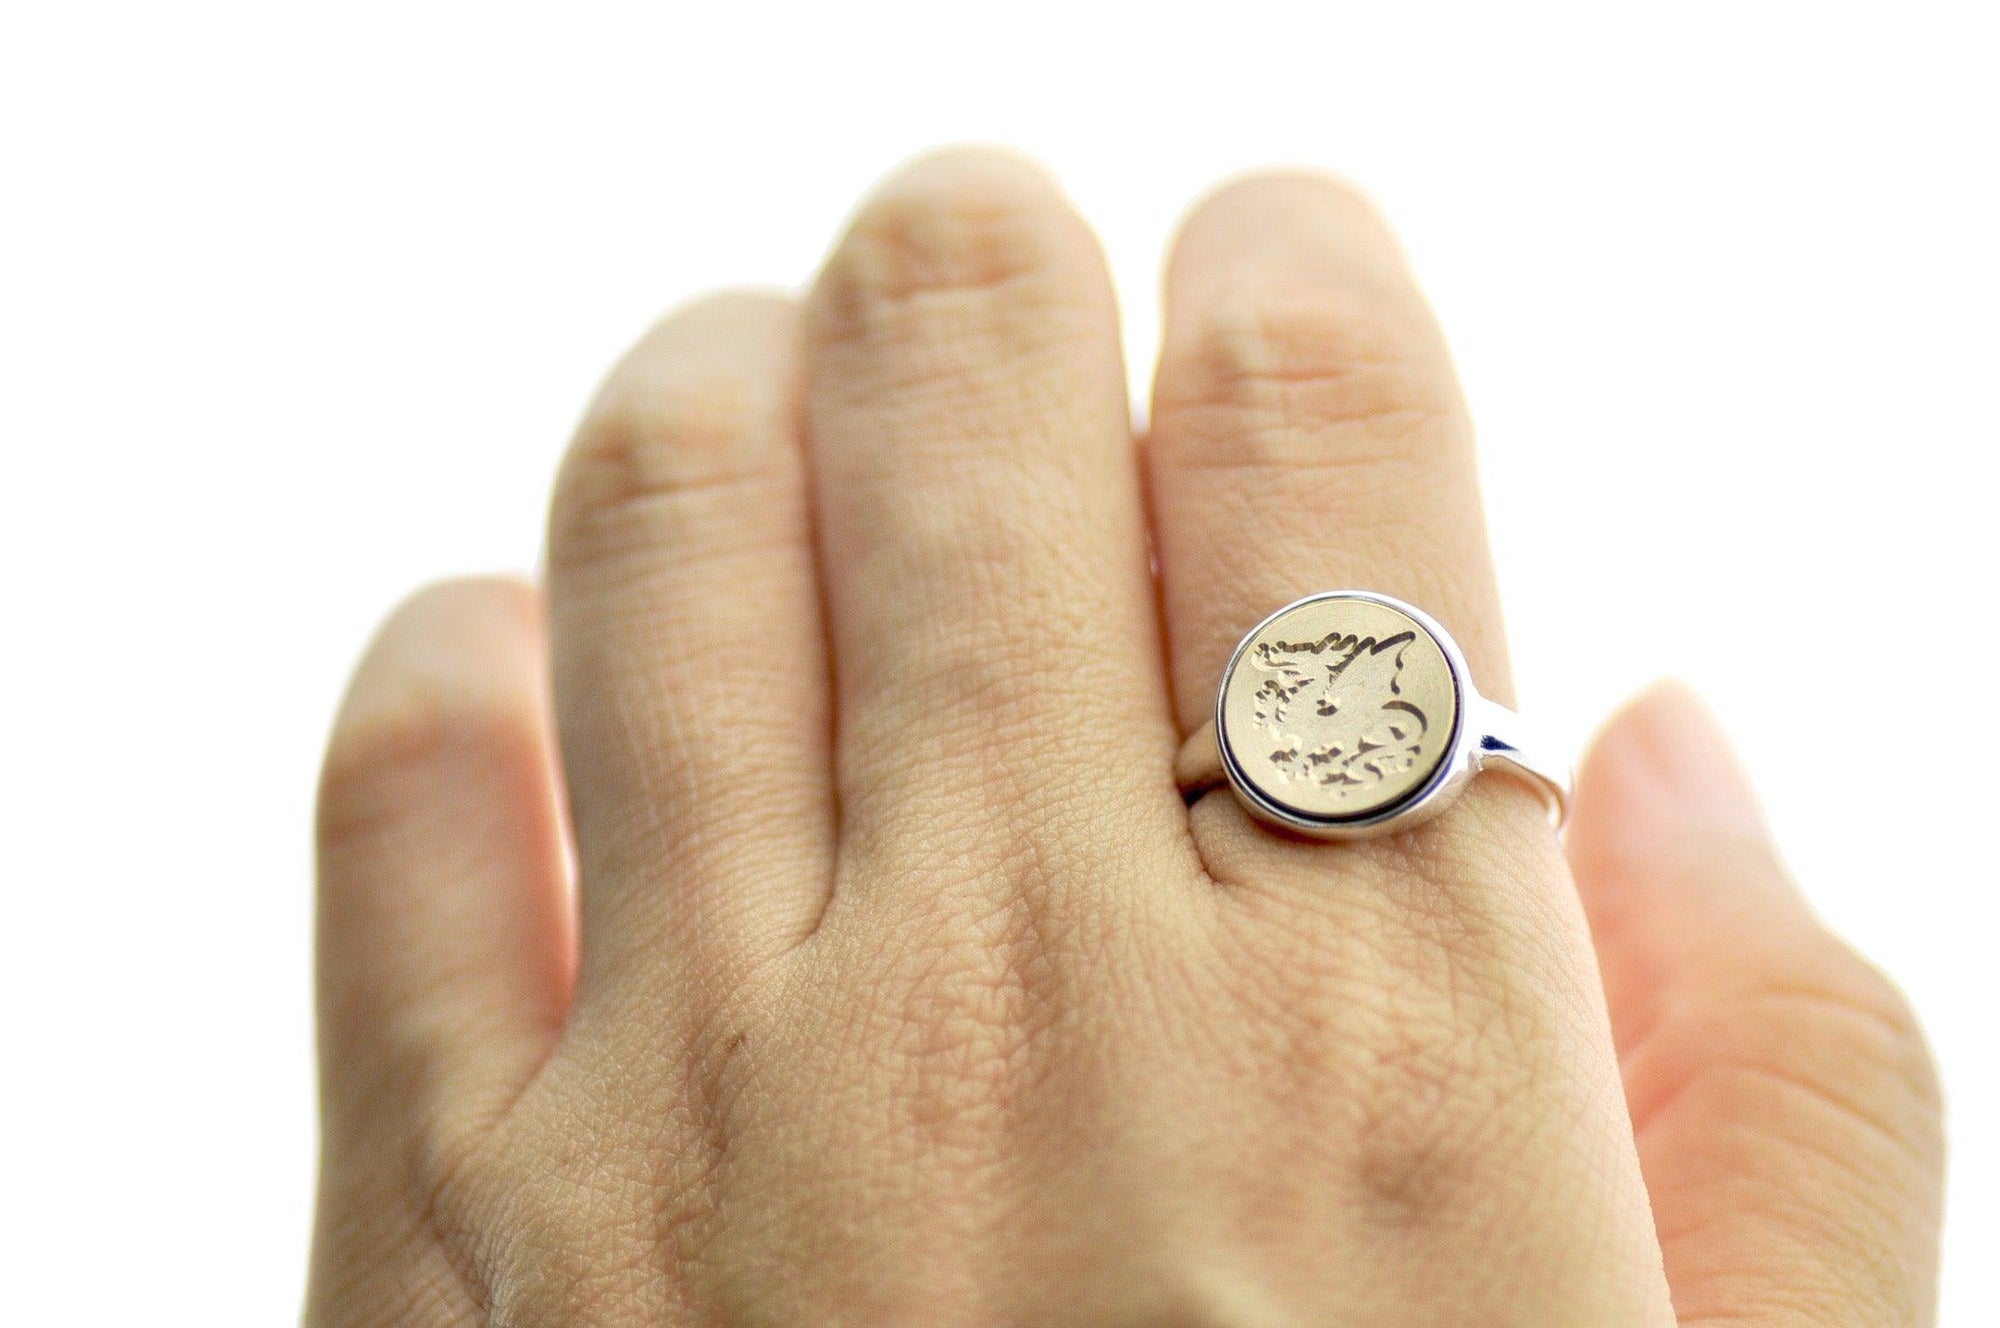 Heraldic Dragon Signet Ring - Backtozero B20 - 12mm, 12mm ring, 12mn, accessory, Dragon, Fleur de Lis, her, Heraldic, jewelry, Mythical Creatures, ring, signet ring, wax seal, wax seal ring, wax seal stamp